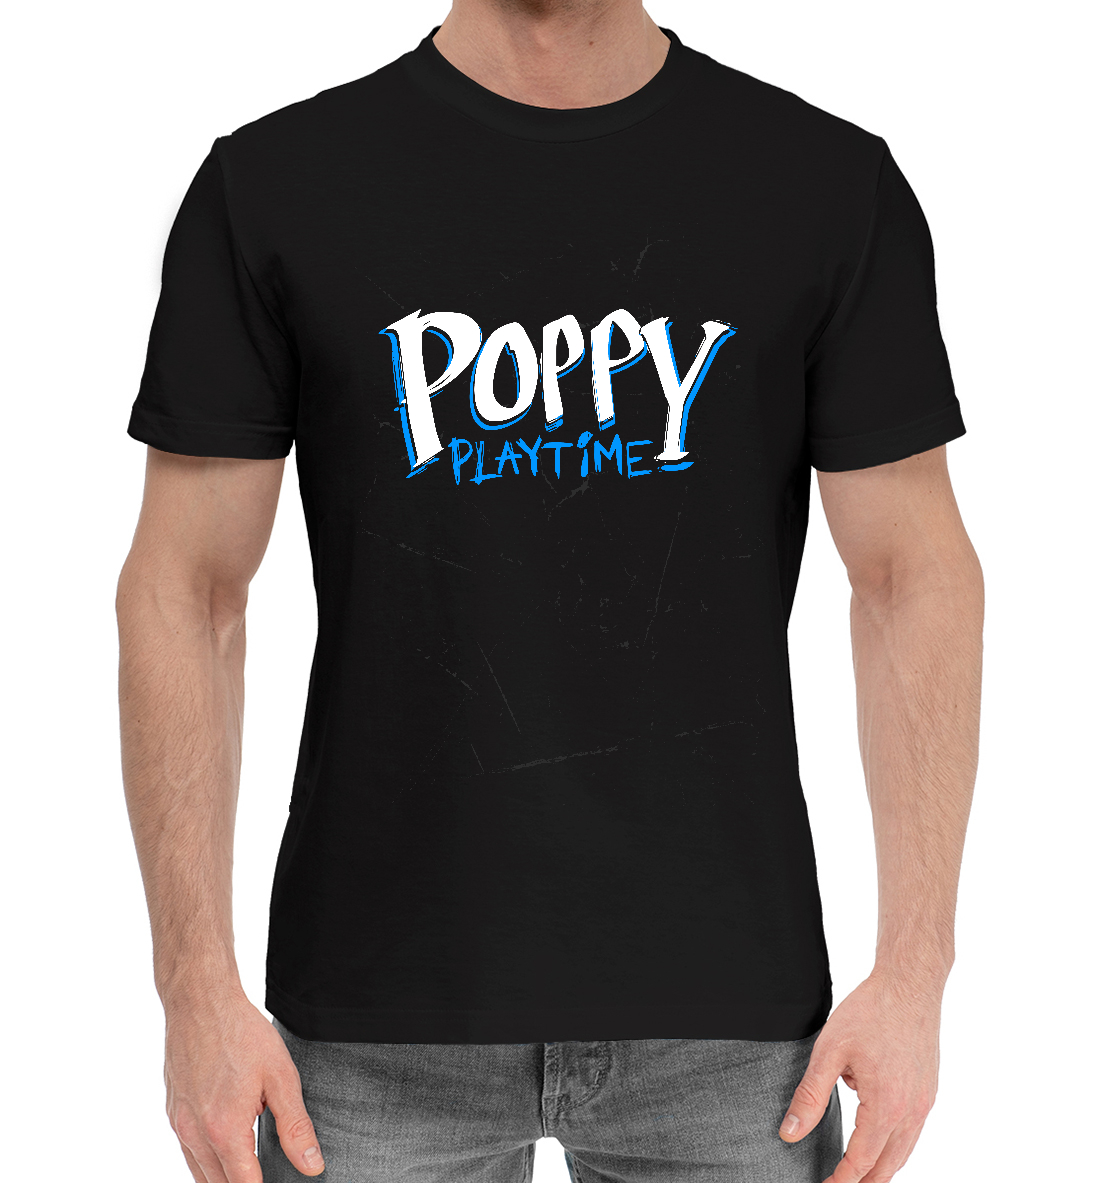 Мужская Хлопковая футболка с принтом Poppy Playtime - Потертости, артикул PPE-992658-hfu-2mp